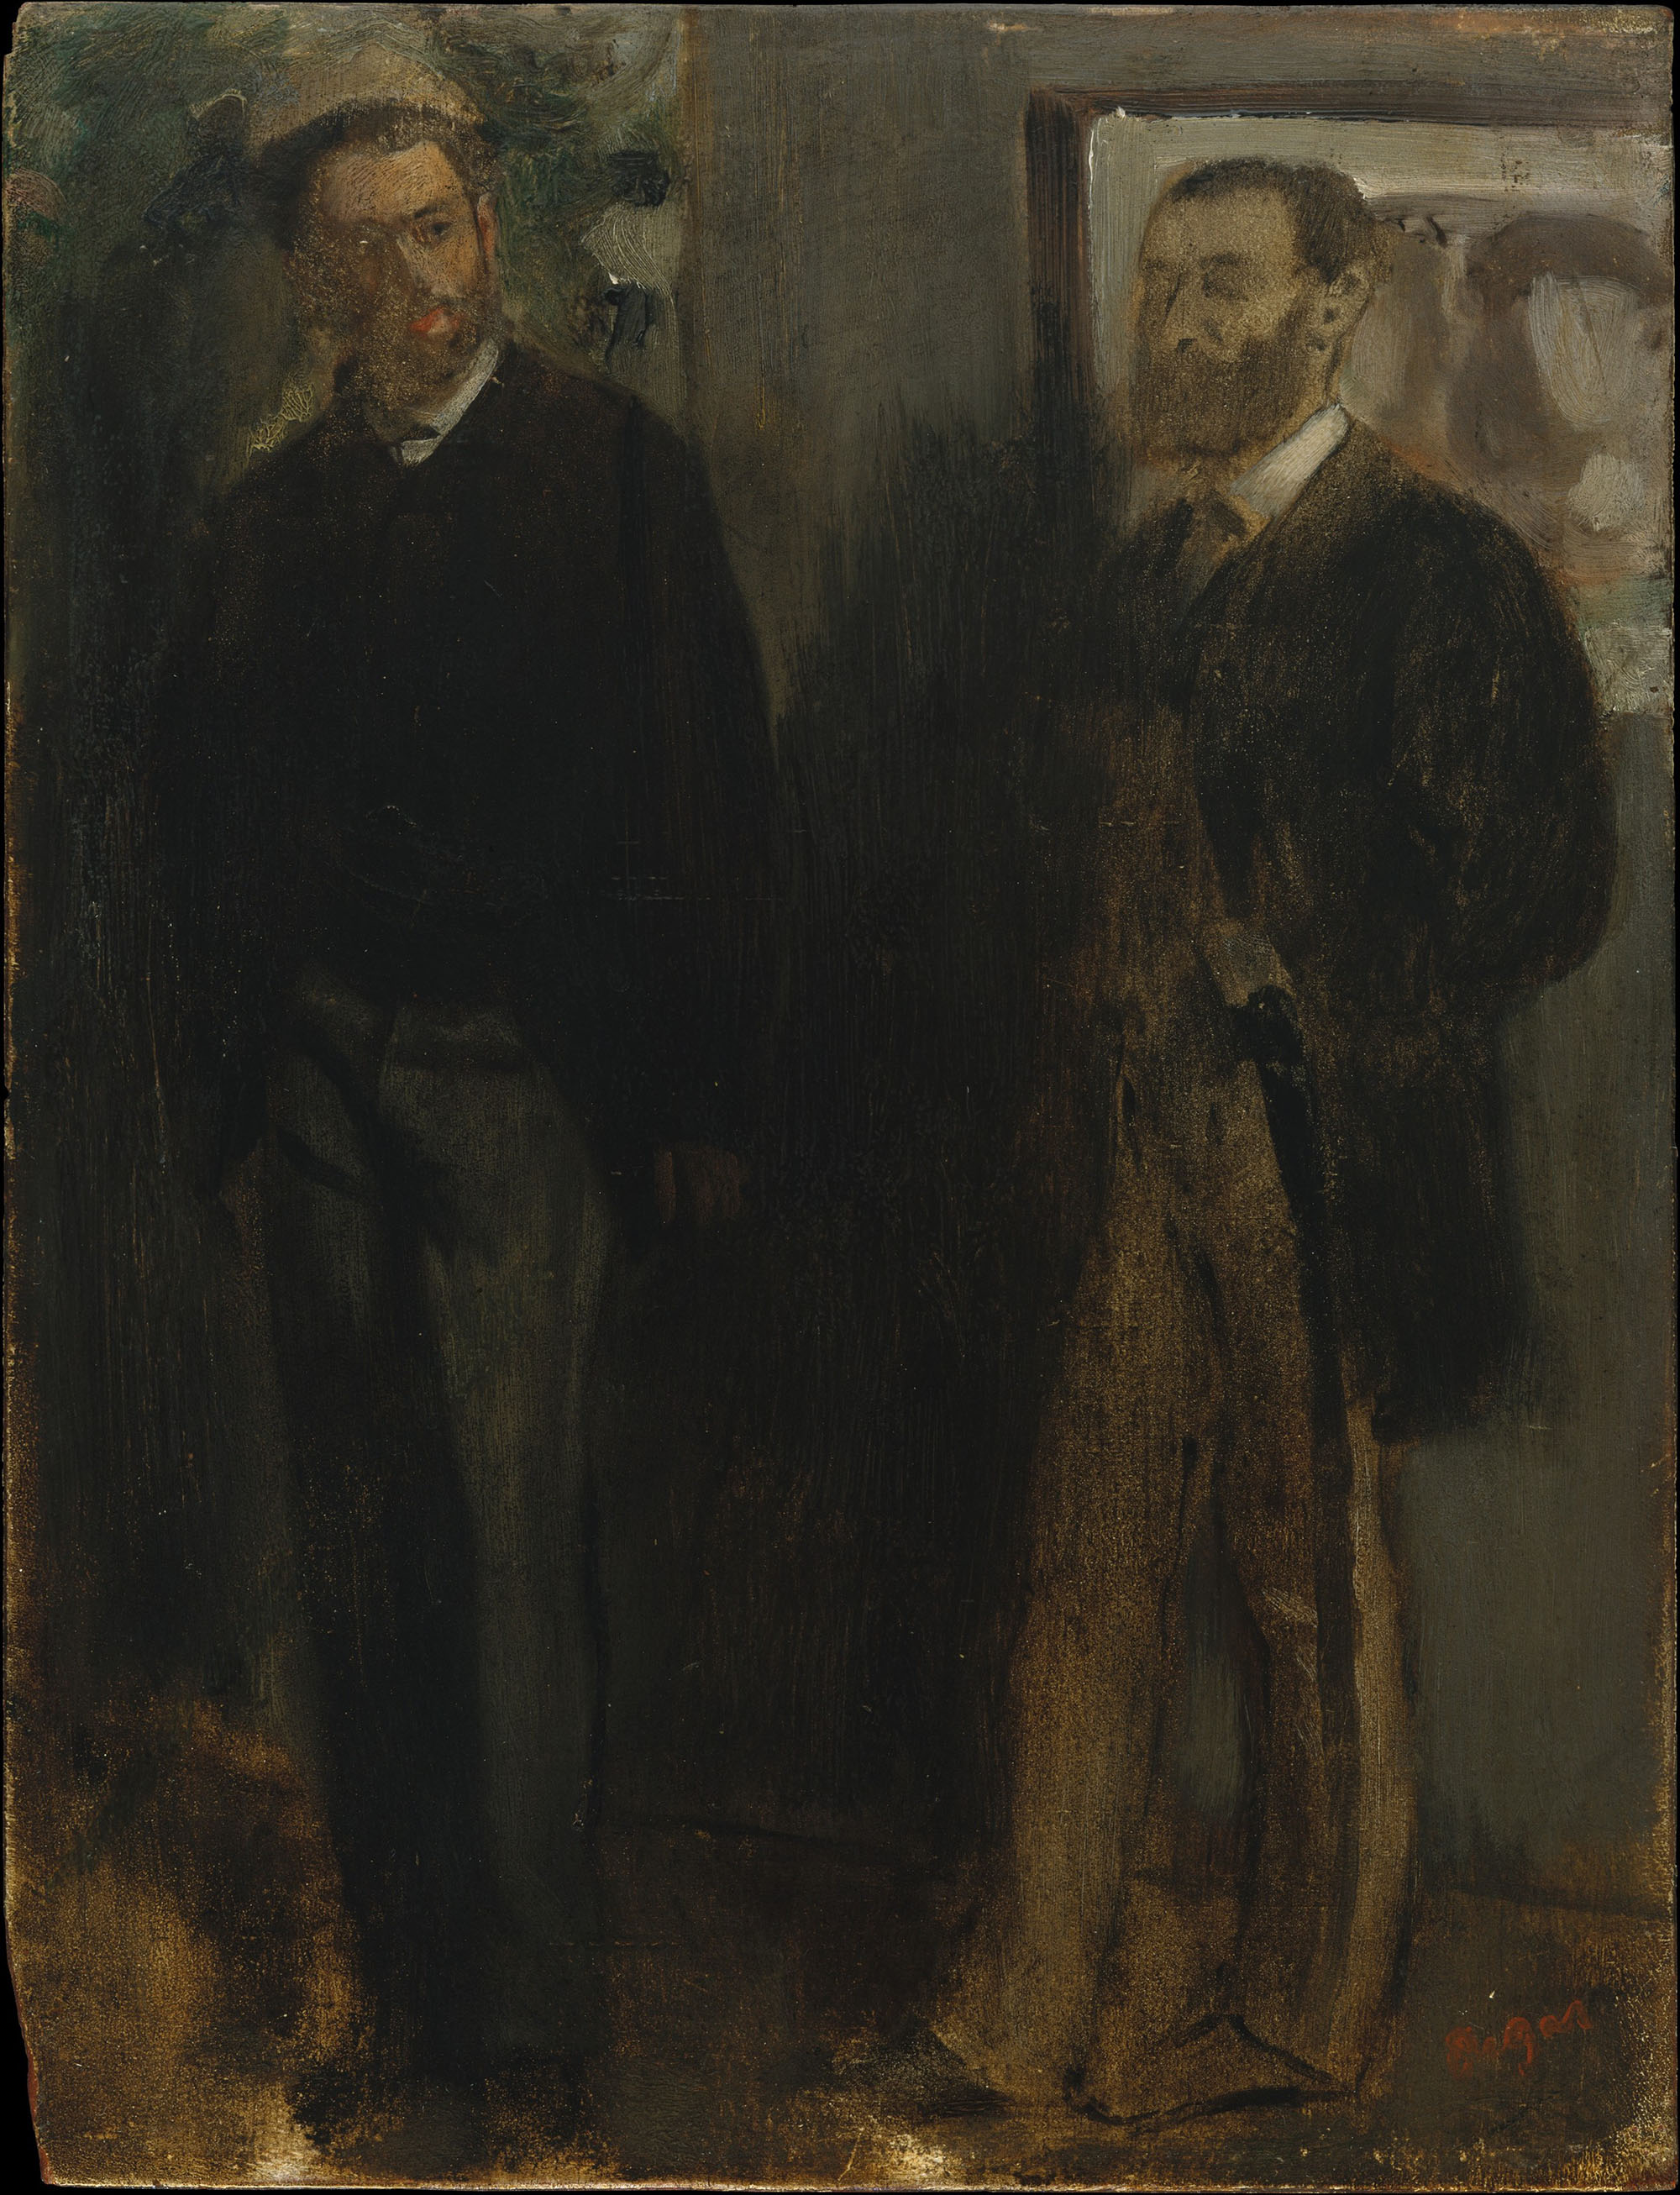 Эдгар Дега. "Портрет двух мужчин". 1869. Музей Метрополитен, Нью-Йорк.